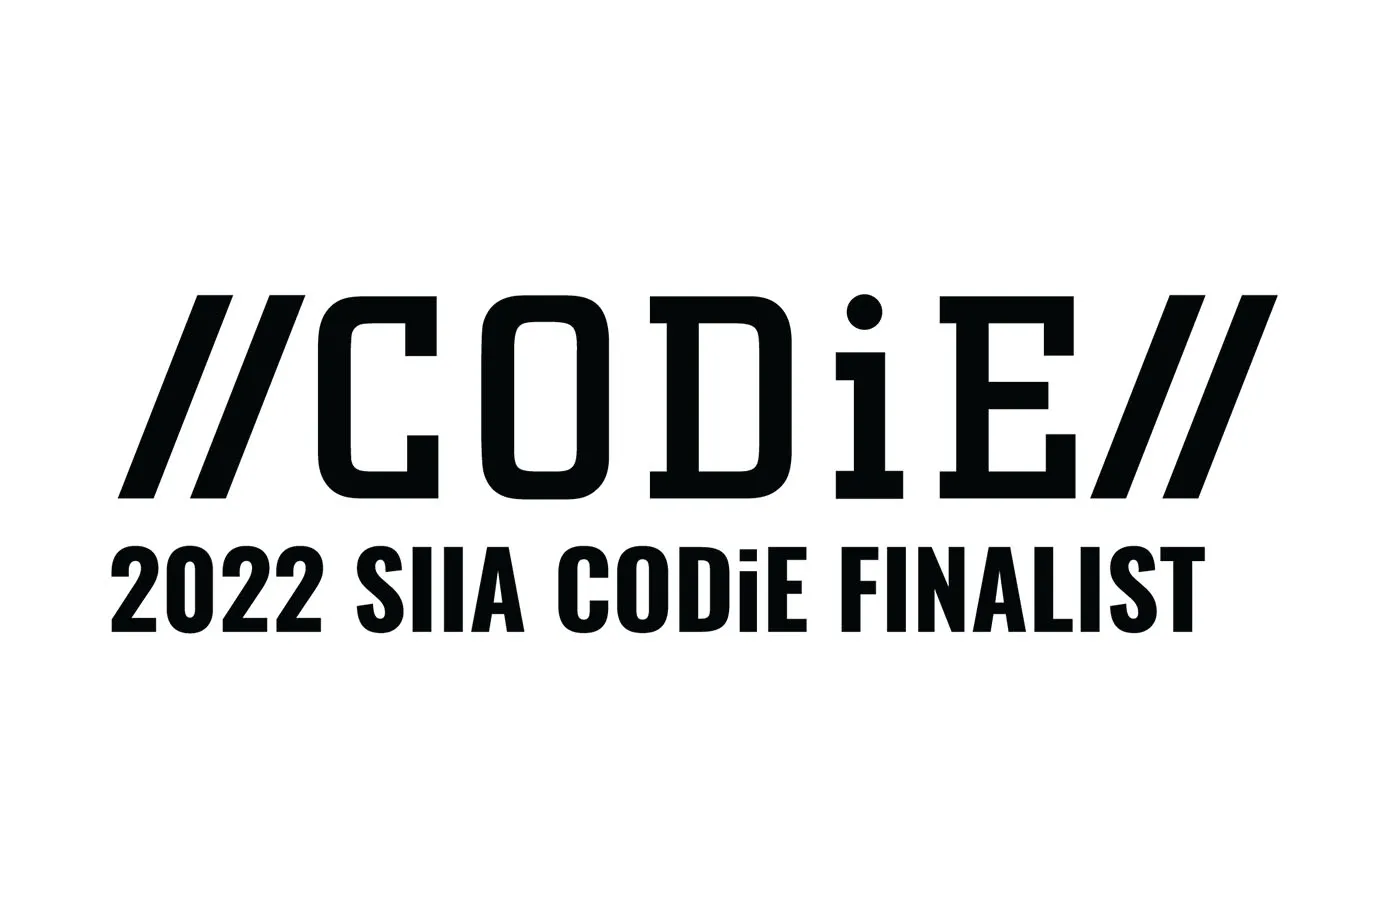 CODiE Award Finalists